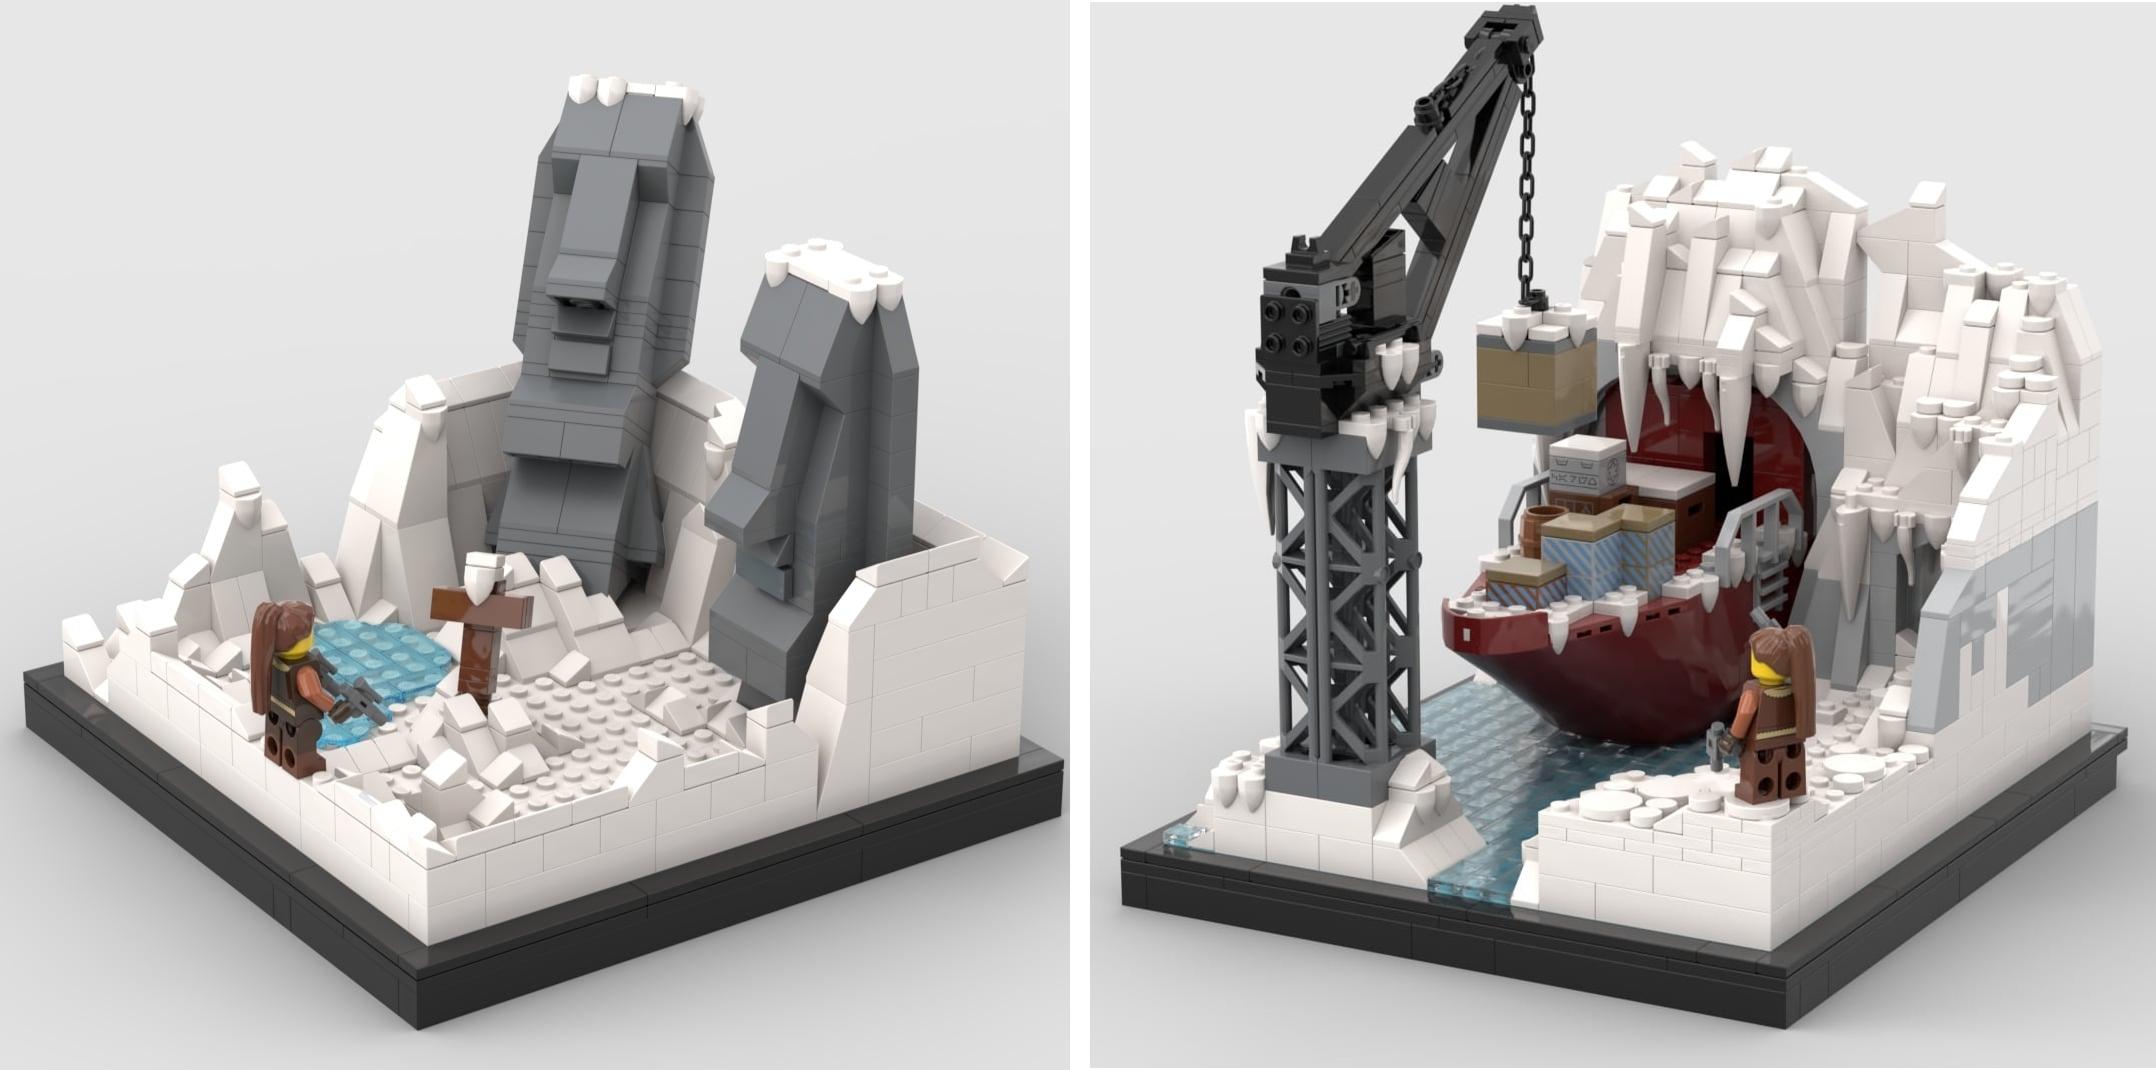 Tomb Raider level sets (Antarctica) made with LEGO Bricklink Studio.